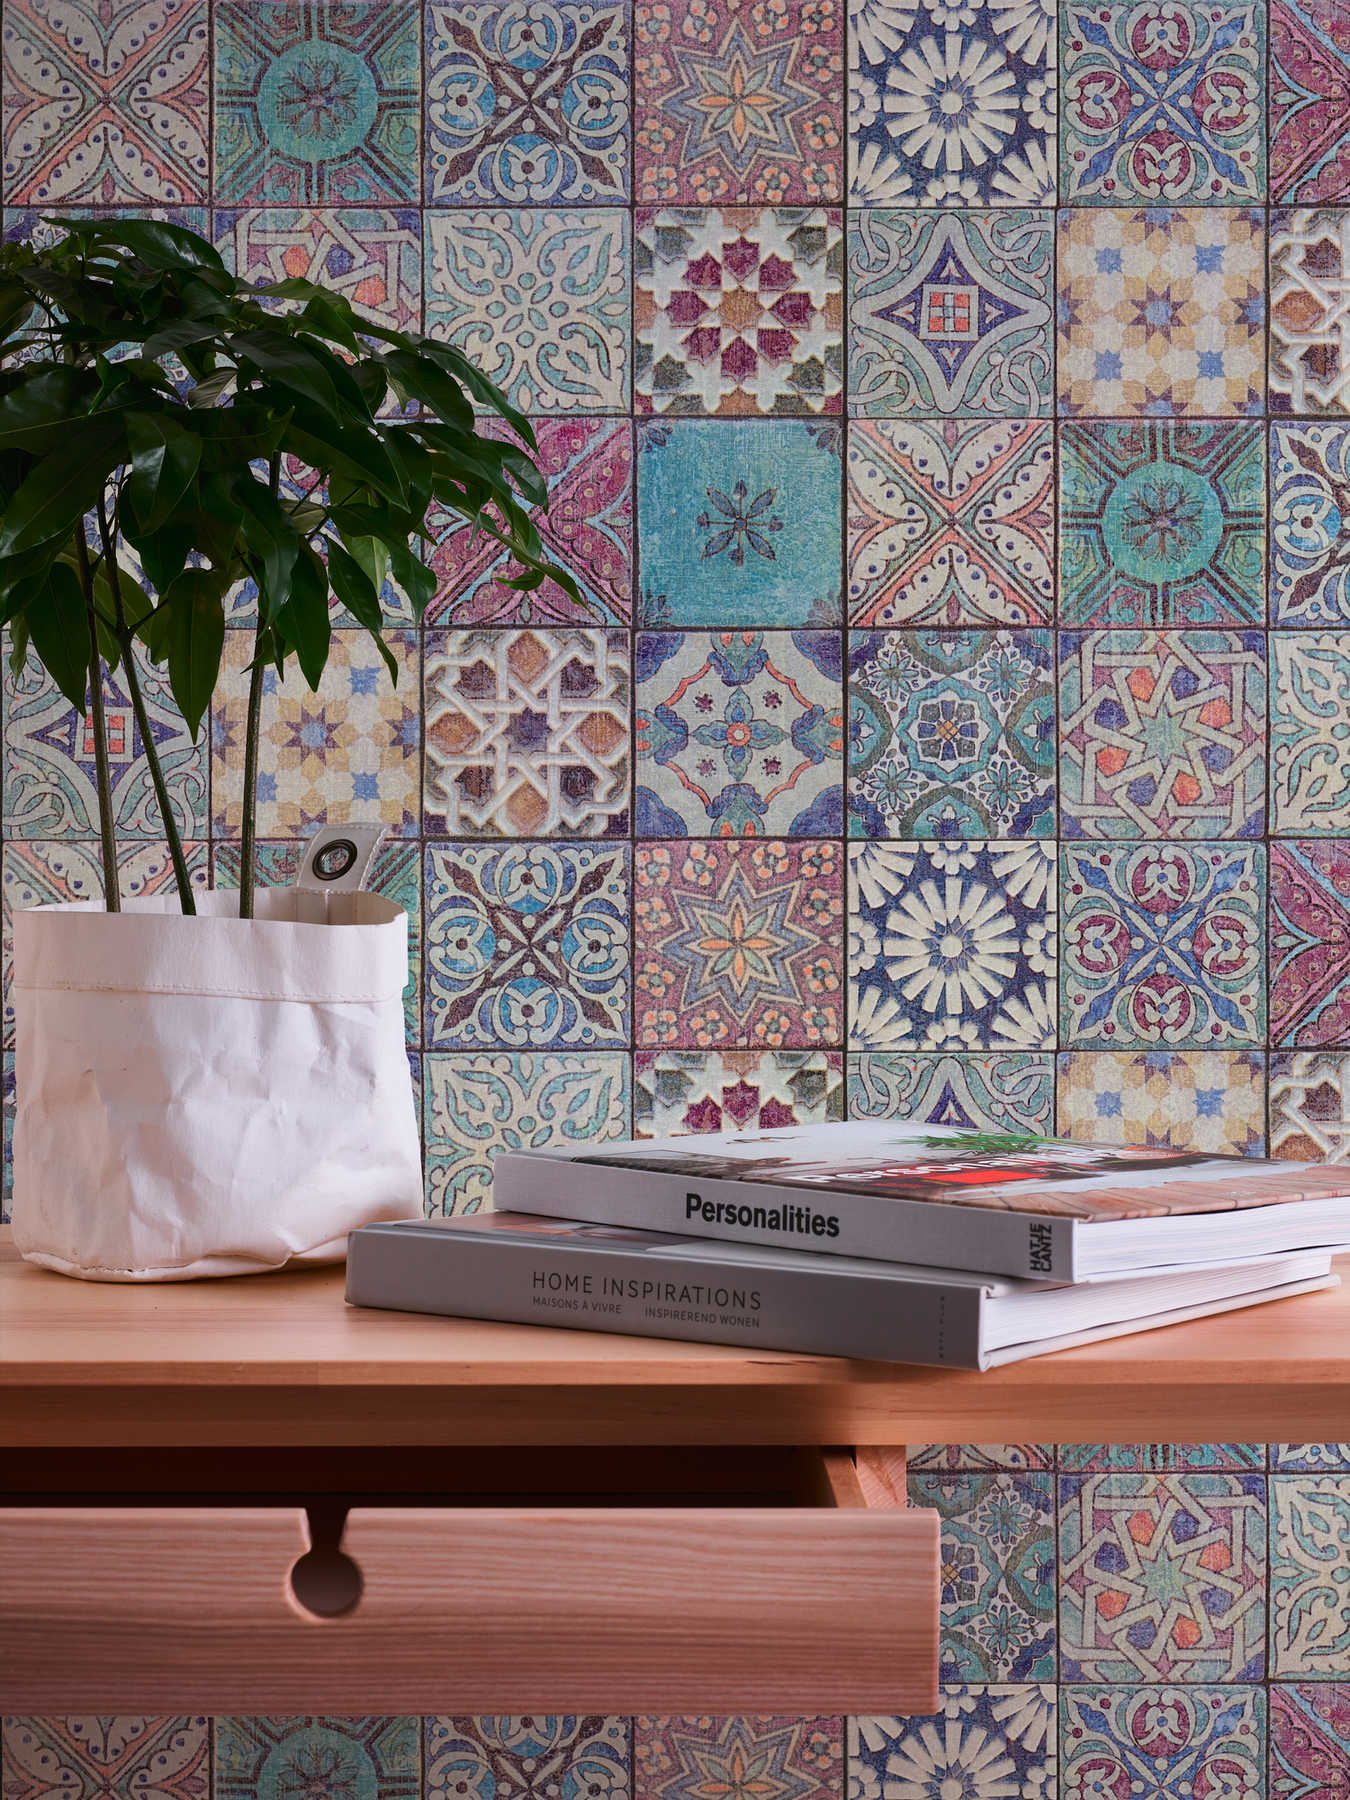             Tile wallpaper mosaic look - blue, purple, cream
        